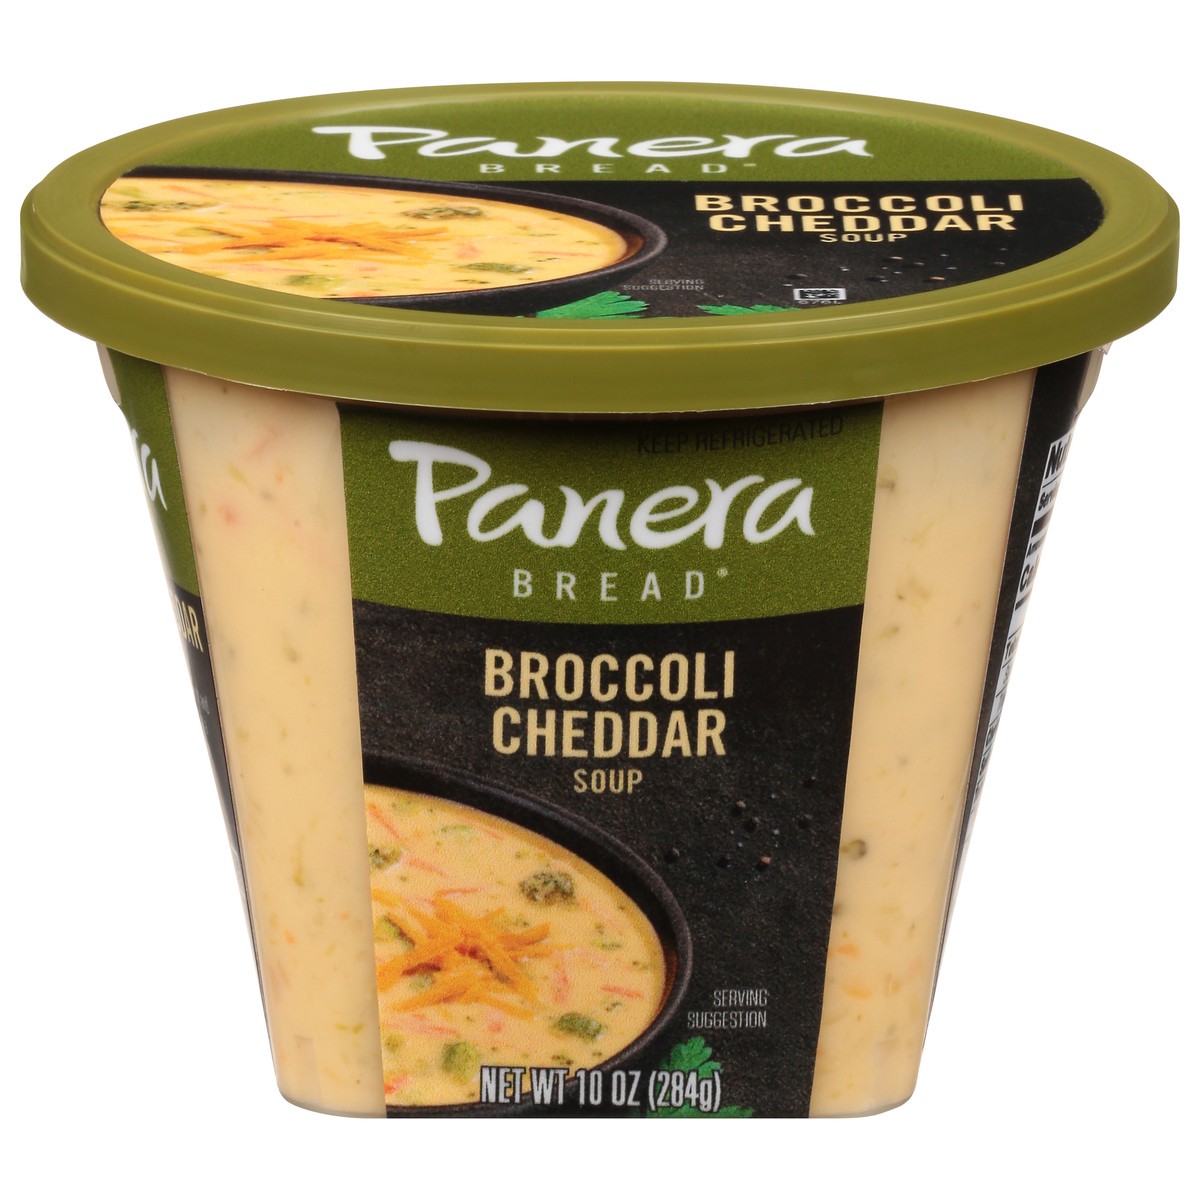 slide 1 of 11, Panera Bread NON BRAND Broccoli Cheddar Soup Refrigerated (Cup), 10 oz